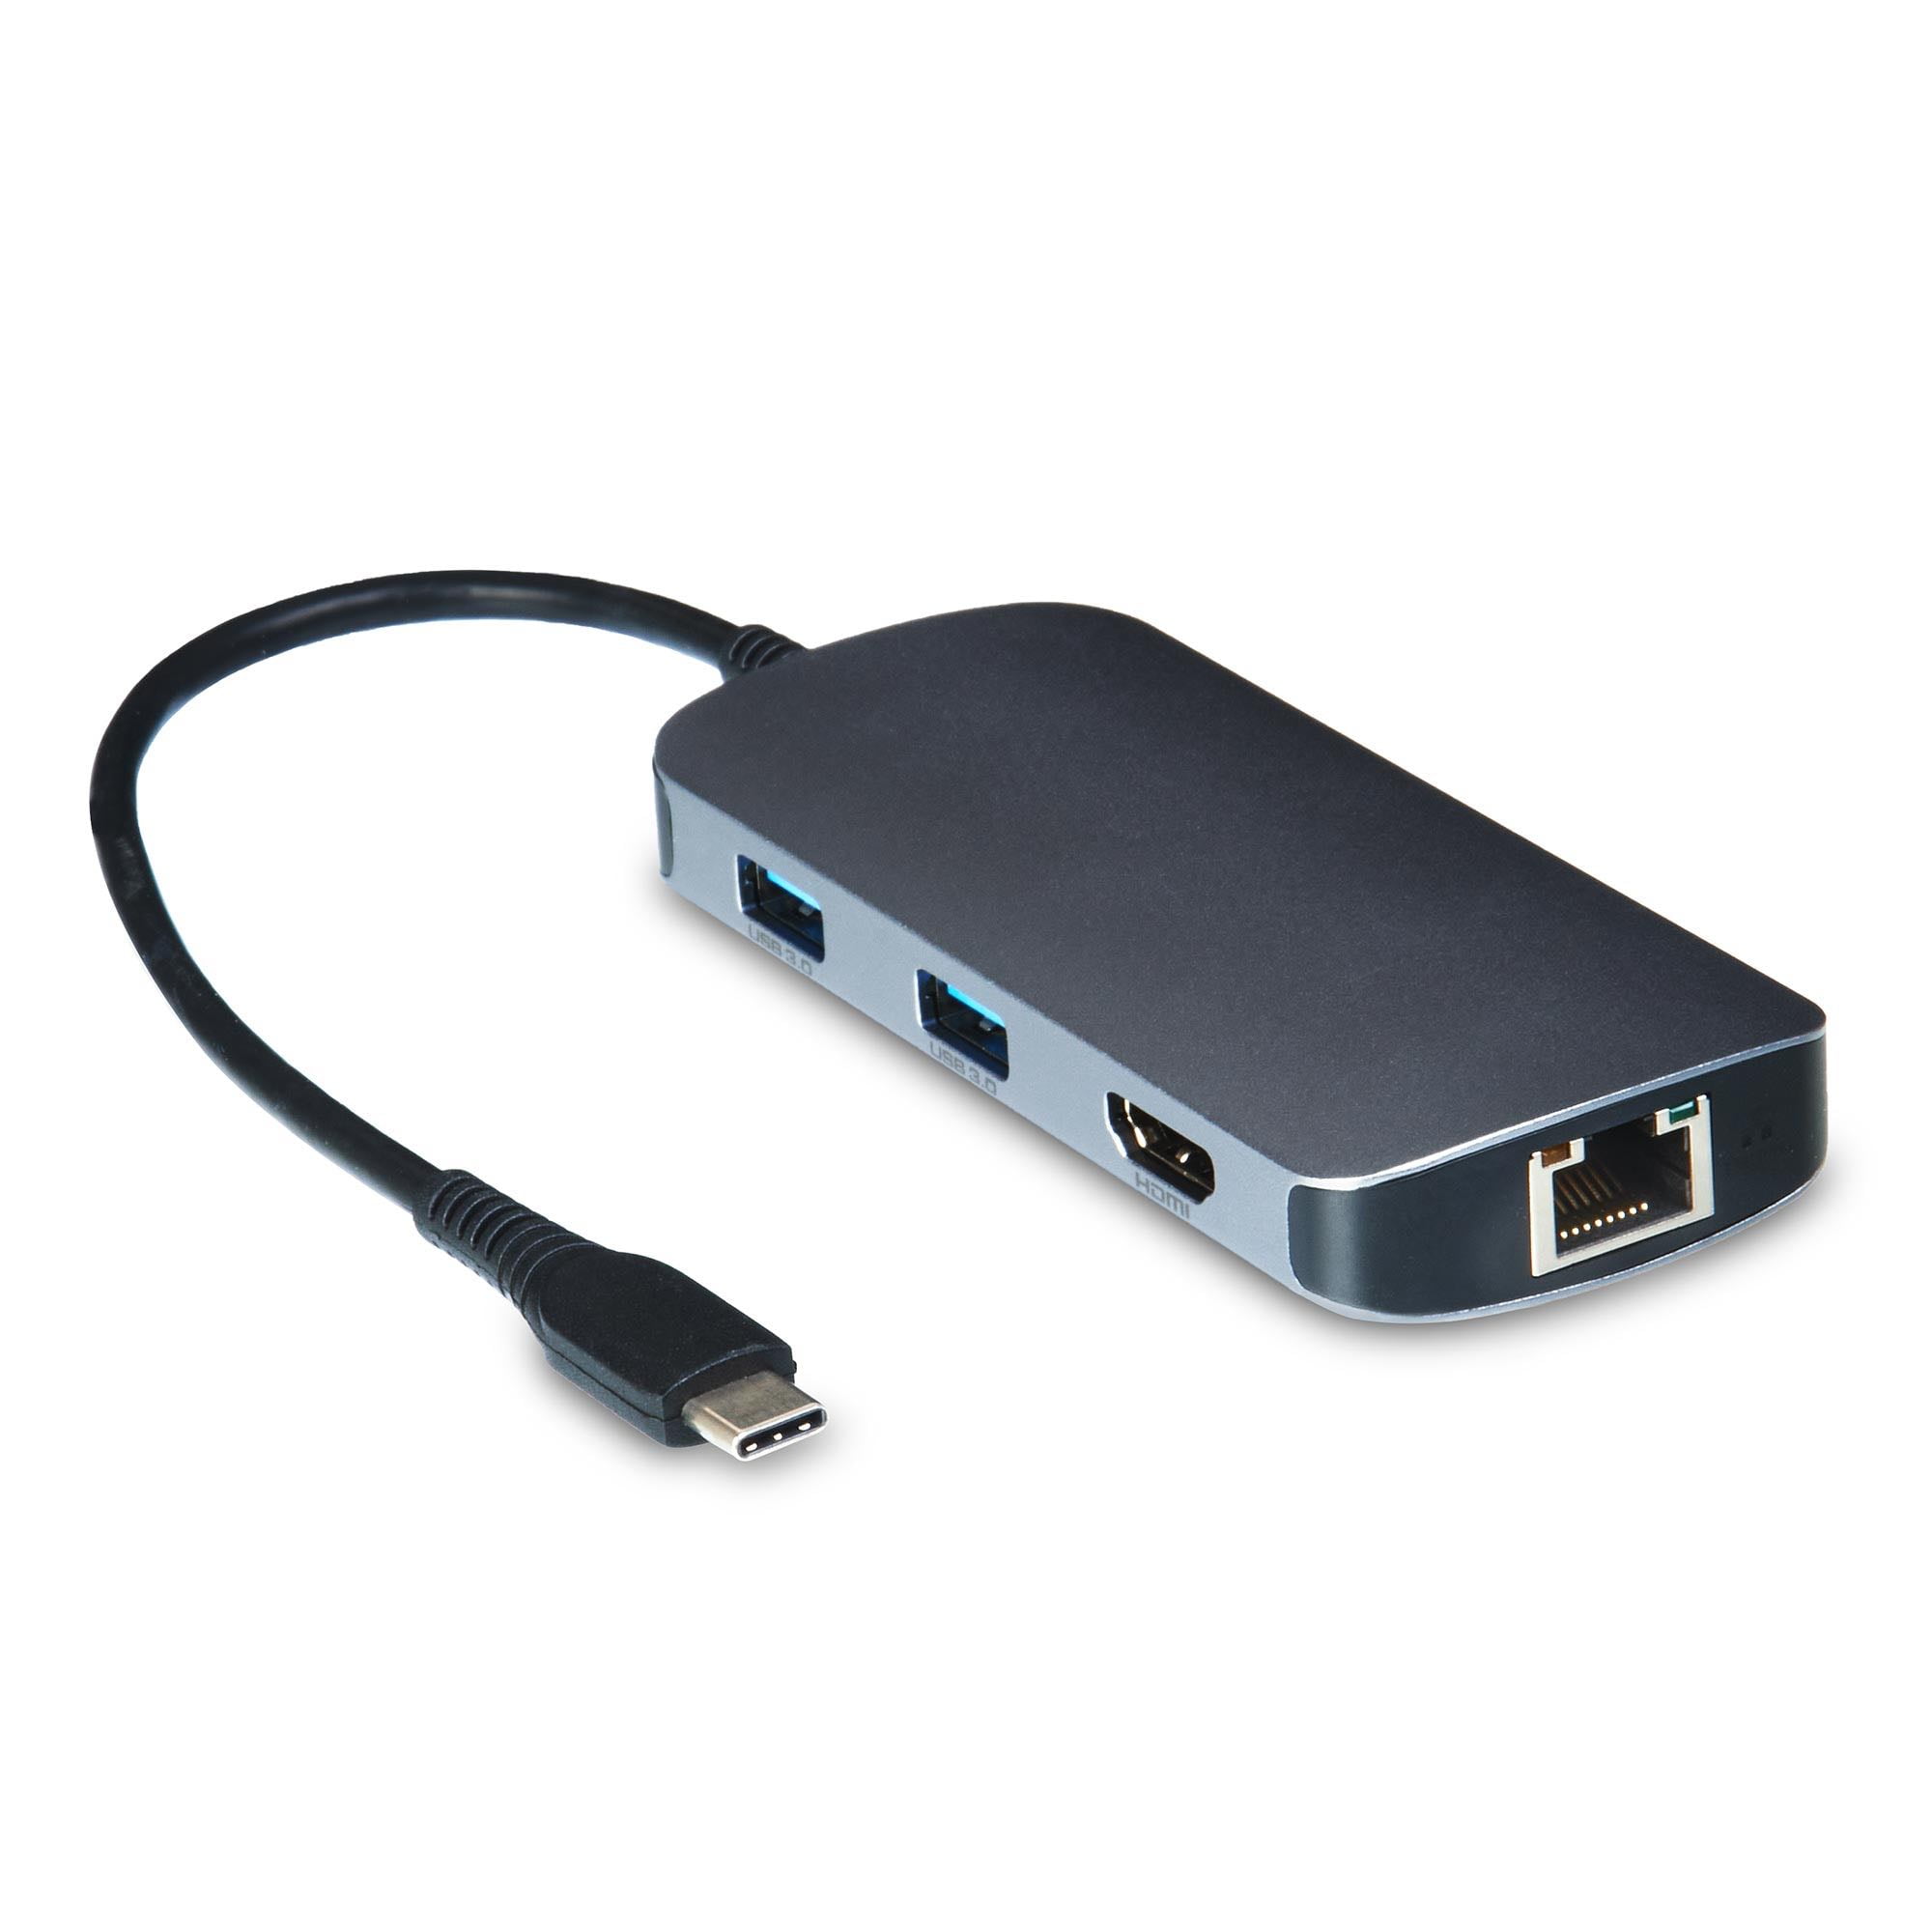 onn. USB-C USB 3.0 and 4K HDMI Compatible Walmart.com